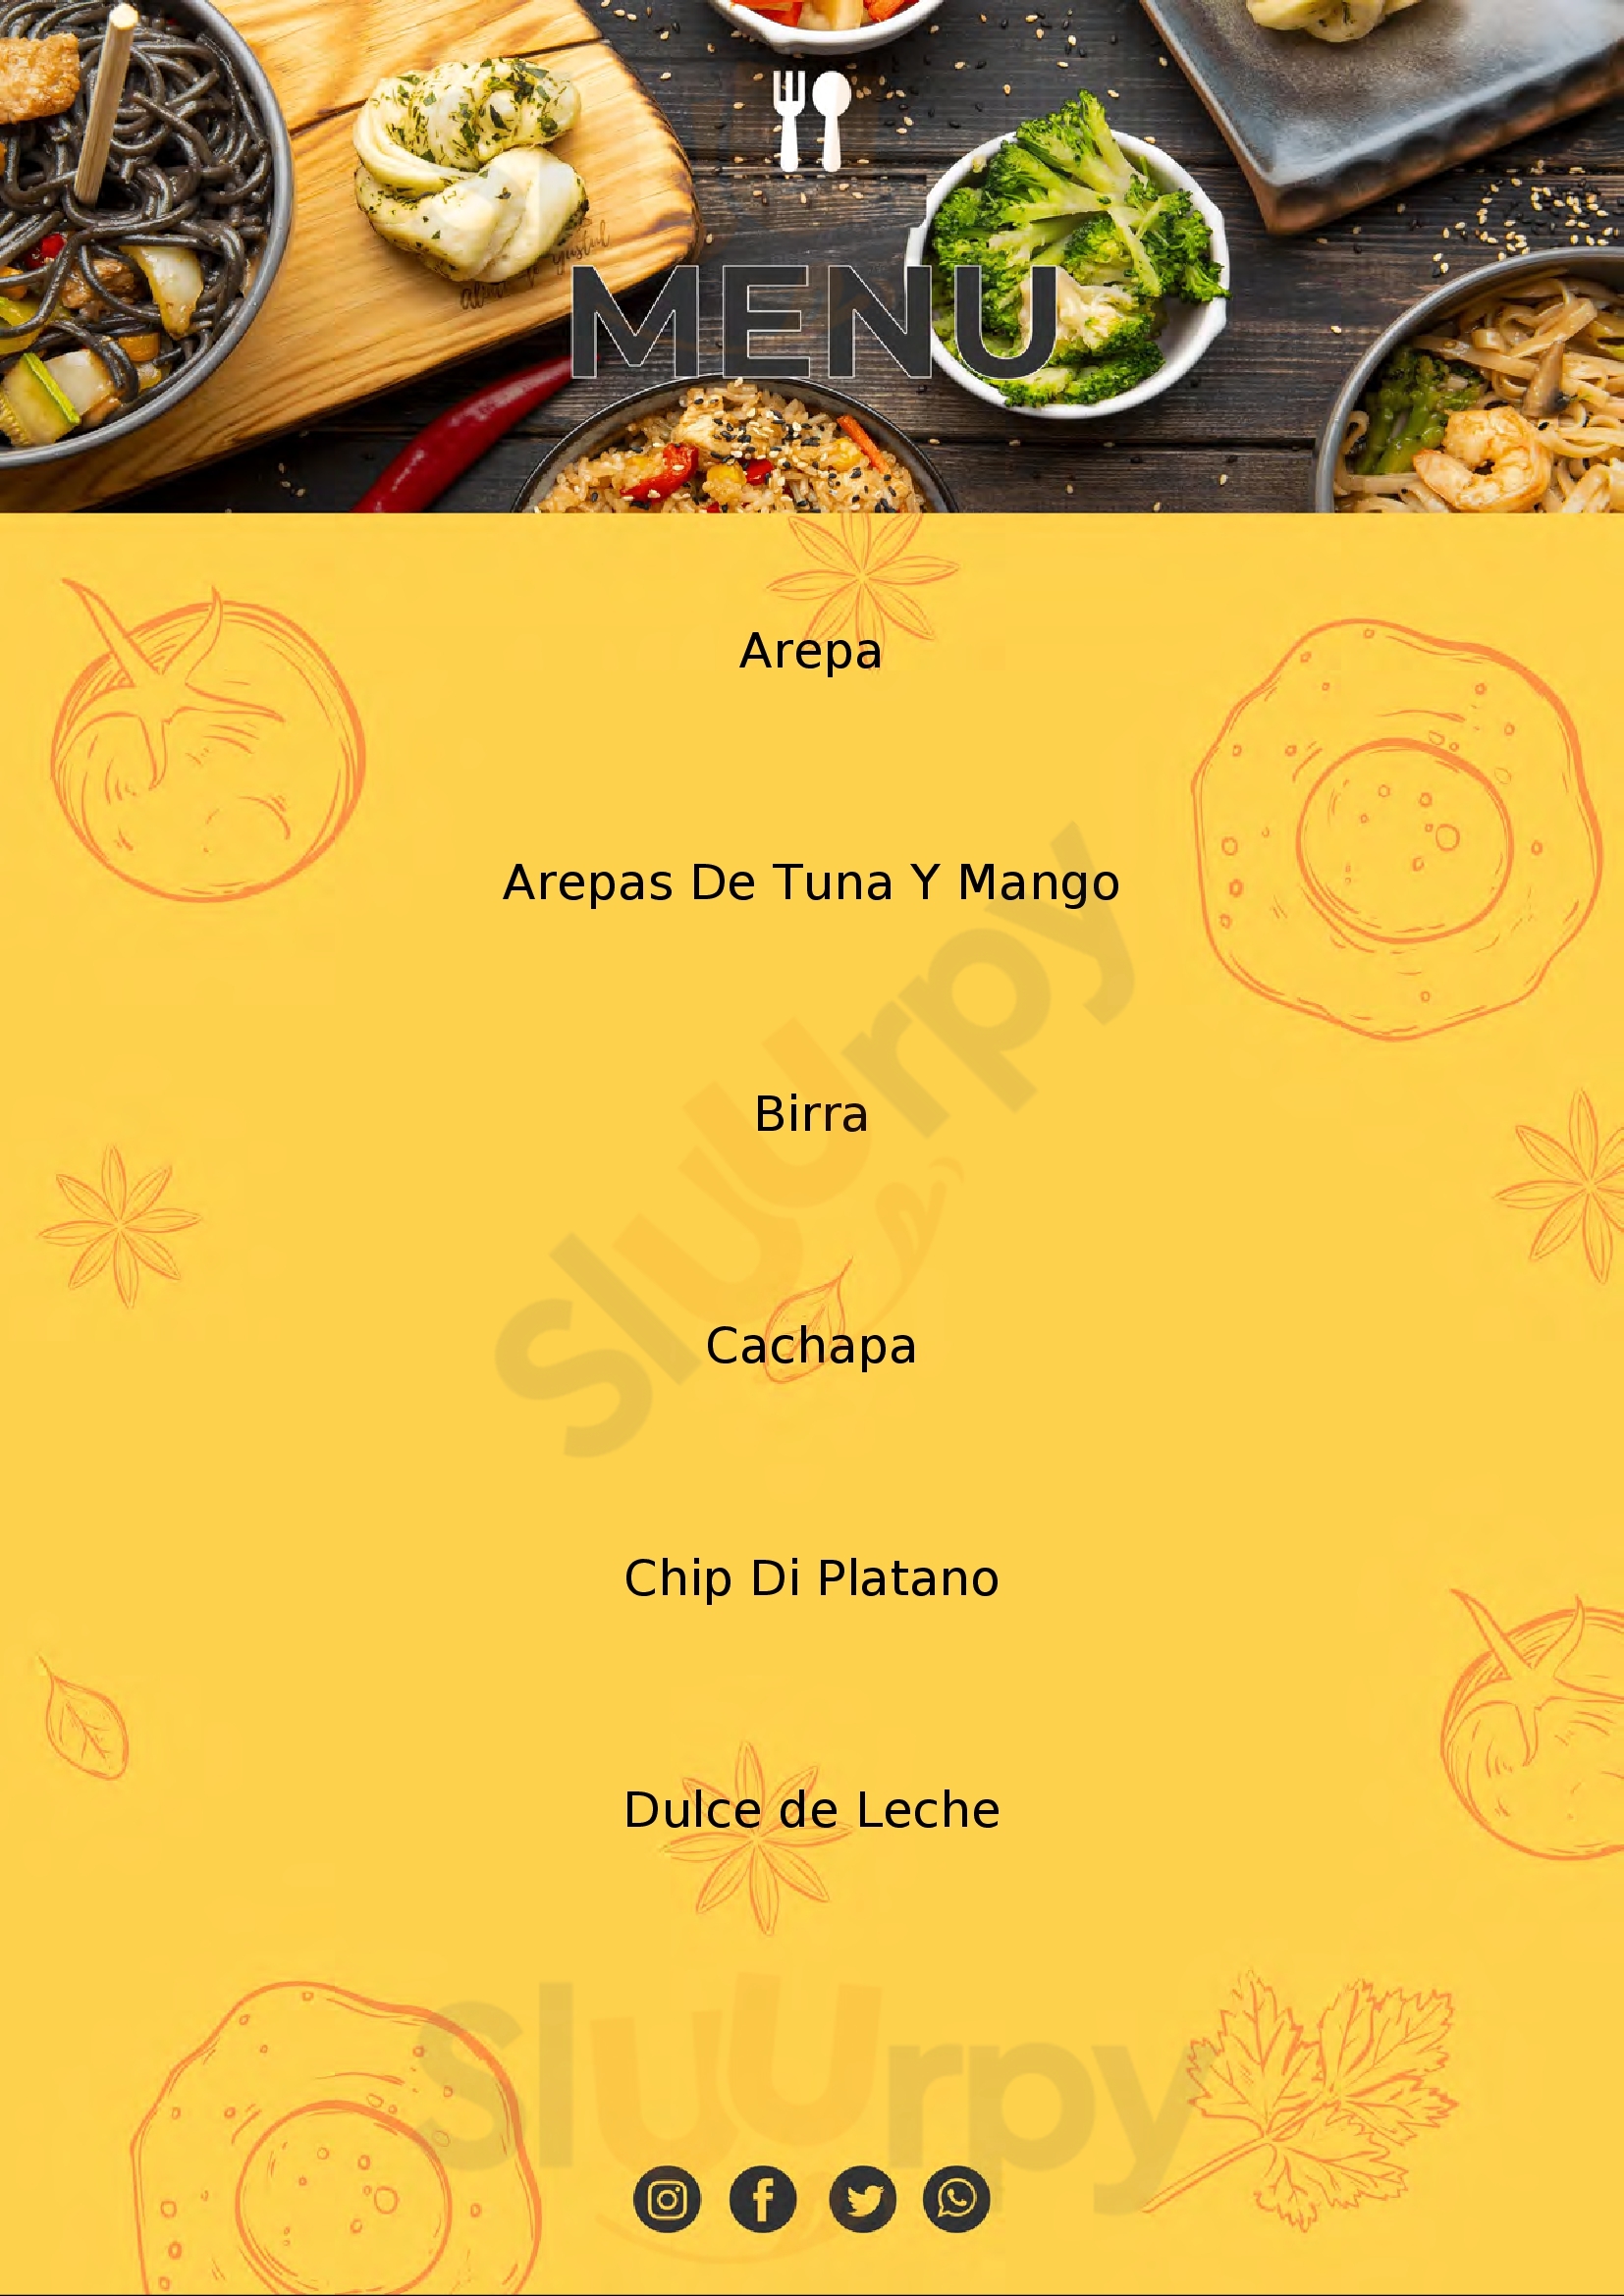 Fulanito Venezuelan Food Avellino menù 1 pagina